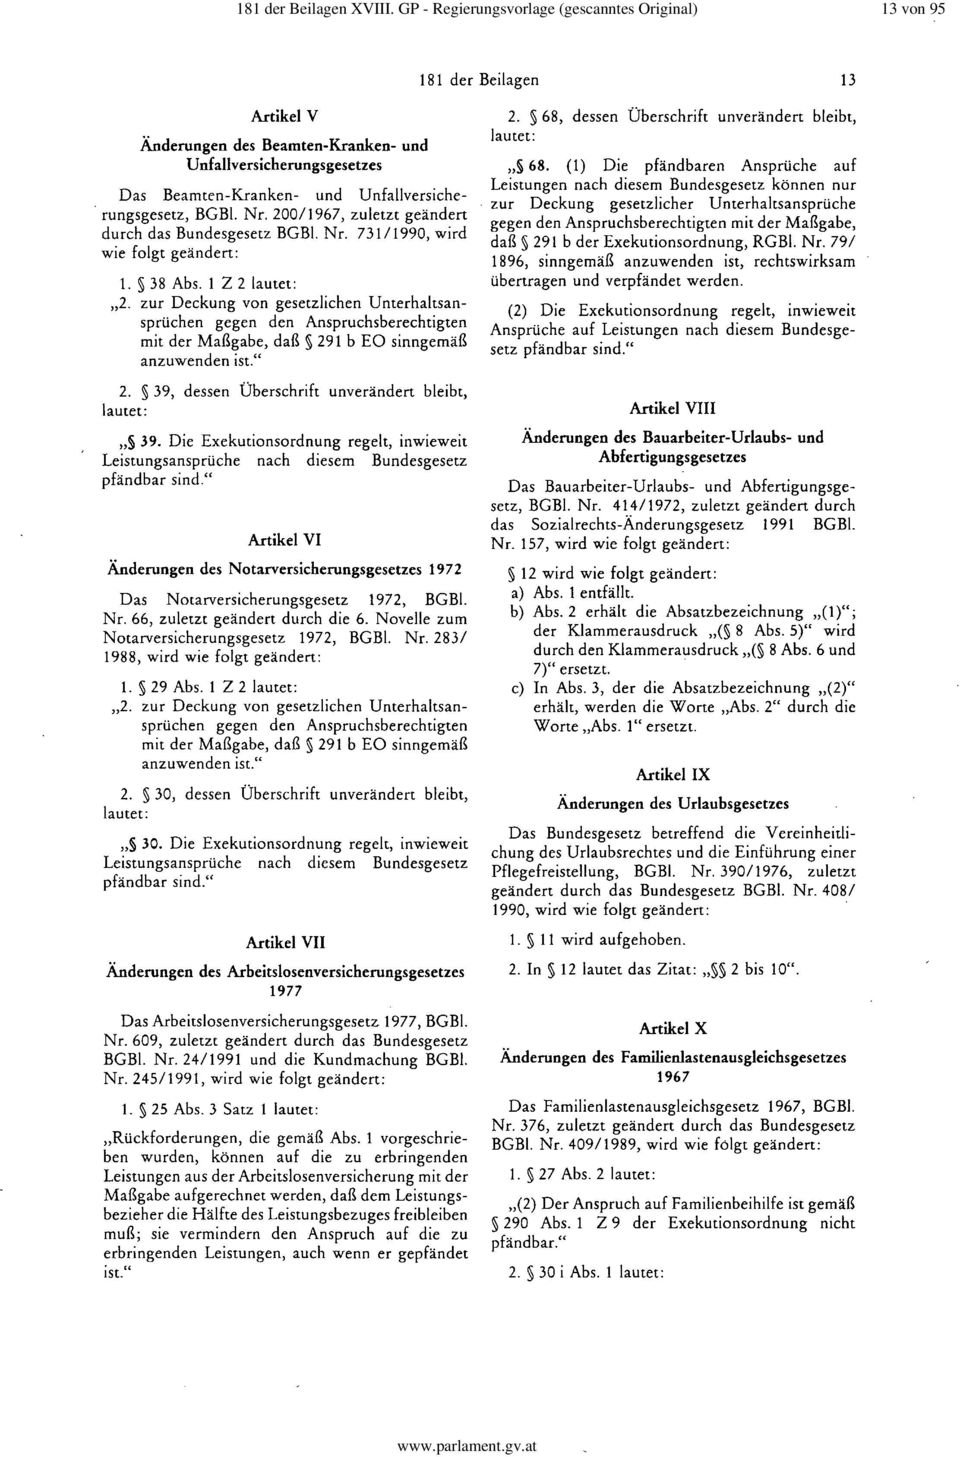 rungsgesetz, BGBL Nr. 200/1967, zuletzt geändert durch das Bundesgesetz BGBL Ne. 73111990, wird wie folgt geändert: 1. 38 Abs. 1 Z 2 lautet:,,2.